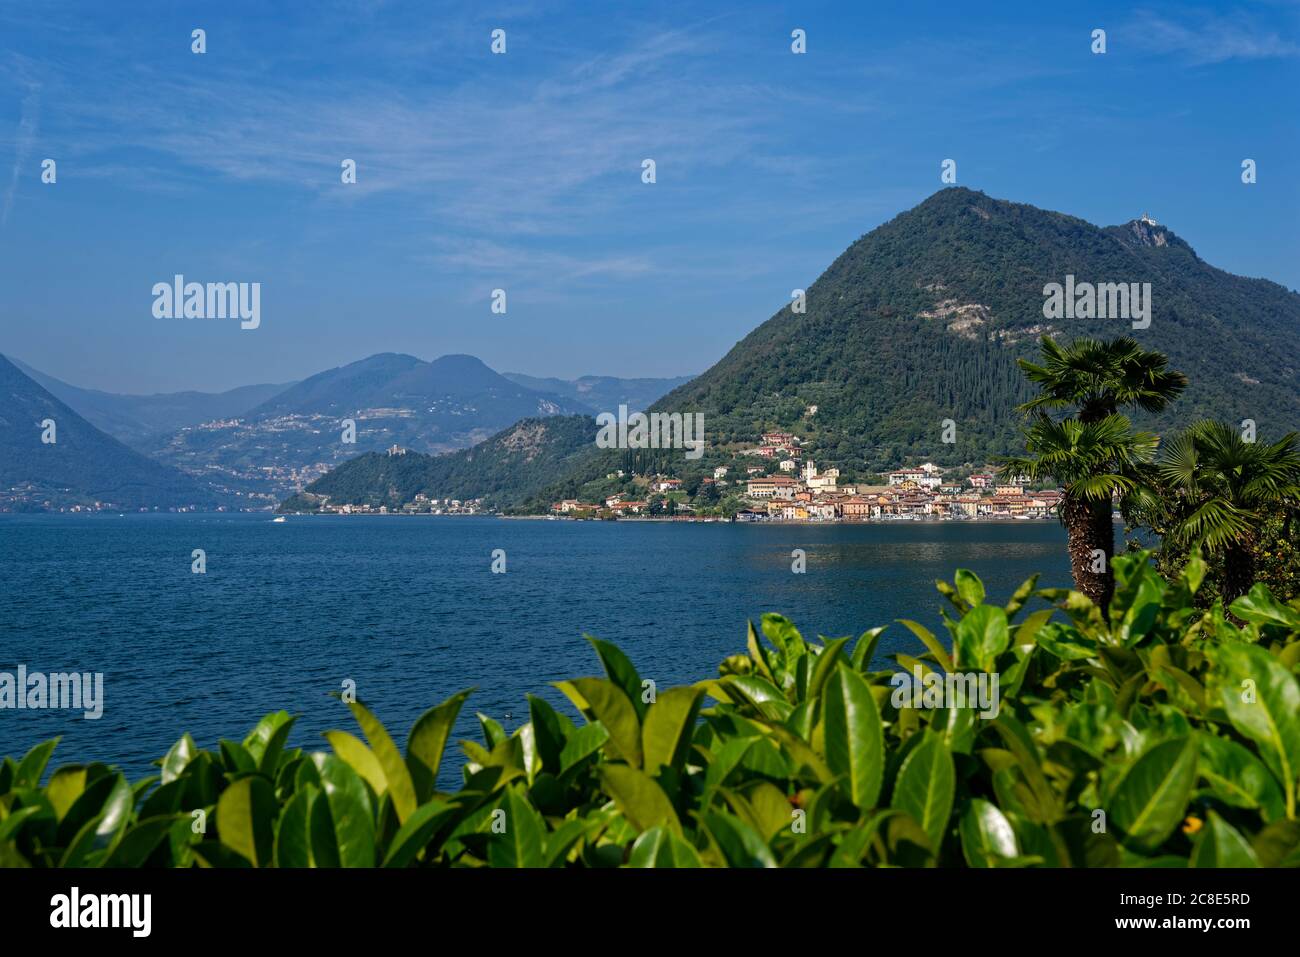 Italy, Lombardy, Monte Isola, Sulzano, Lake Iseo surrounded with mountains Stock Photo